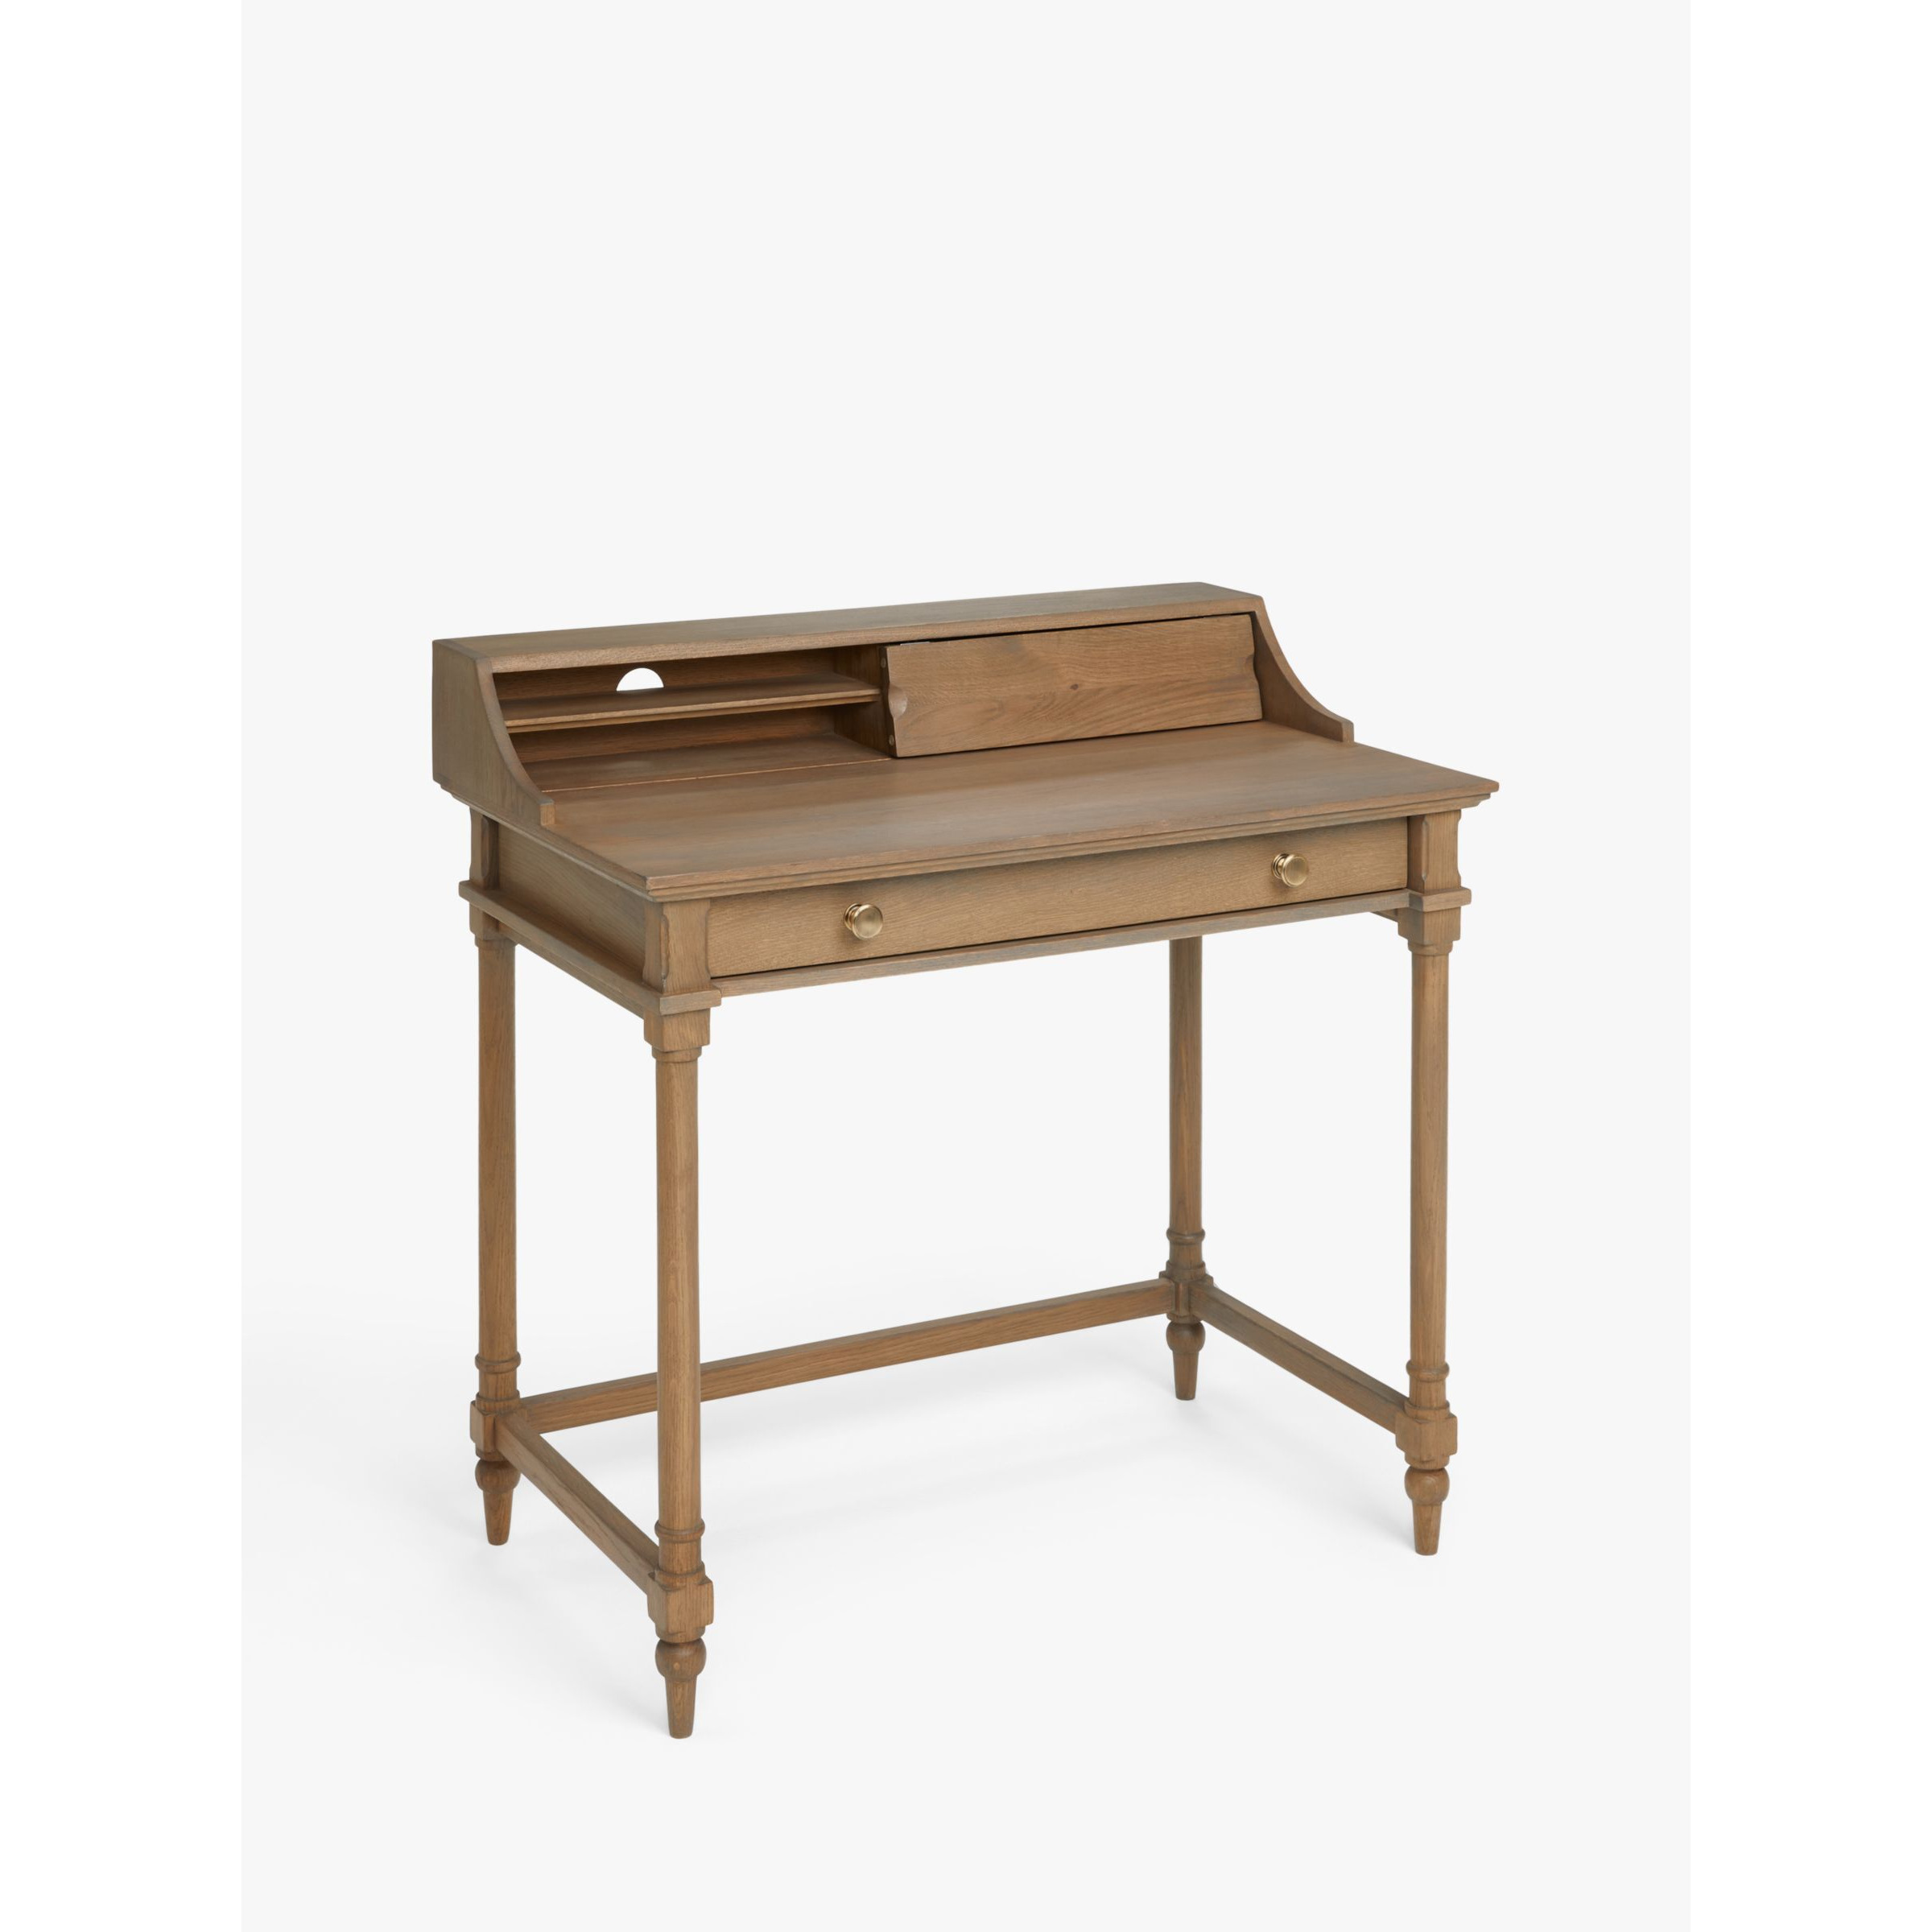 John Lewis Clemence Compact Desk, Greyed Oak - image 1